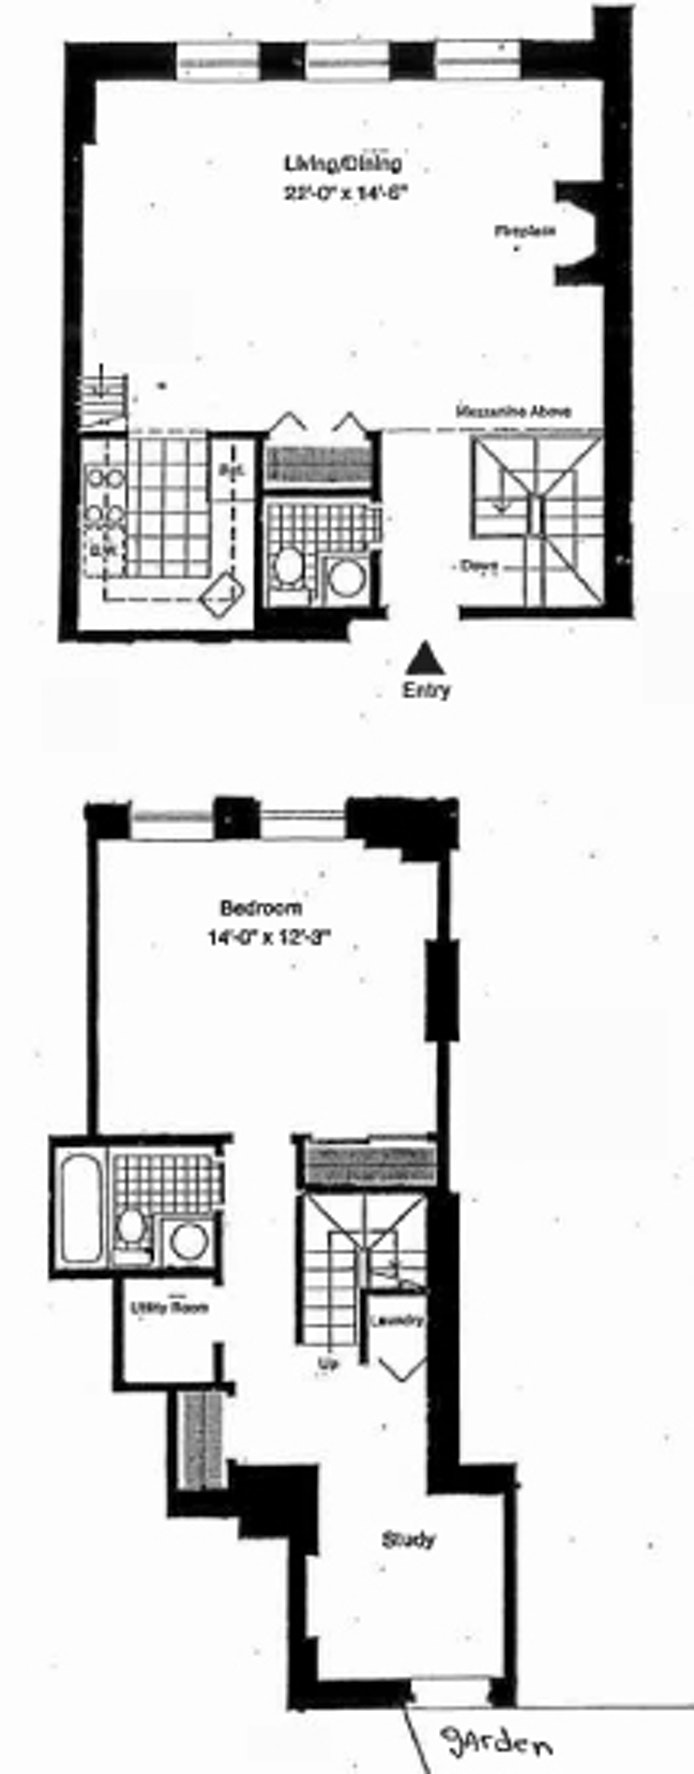 Floorplan for 174 Pacific Street, 1B